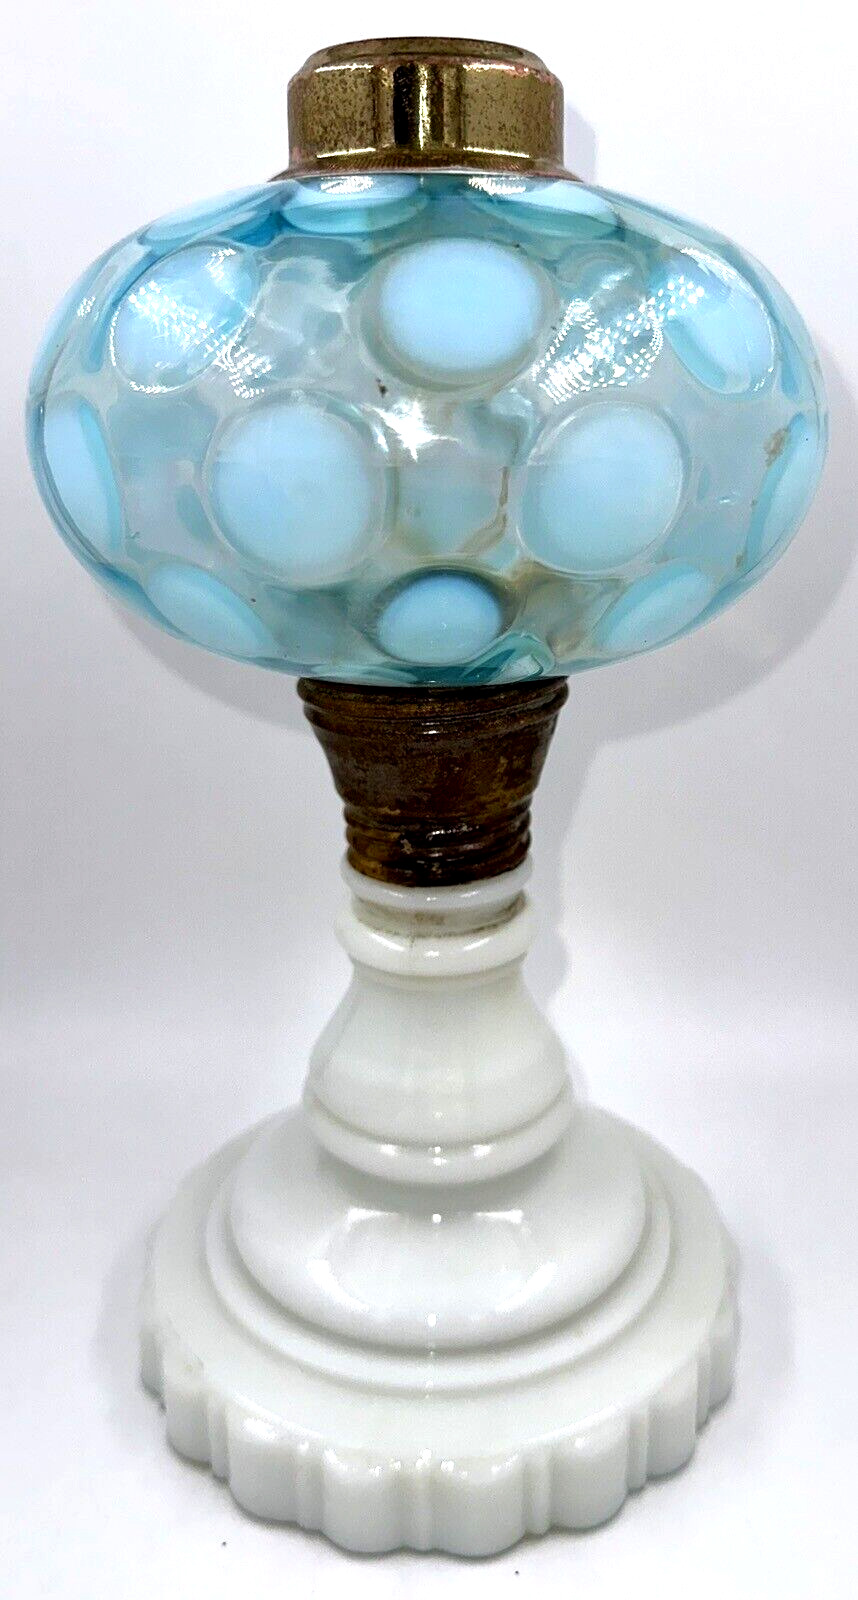 Antique Opalescent Blue Coin Spot Kerosene / Oil Stand Lamp 2 Pc Screw On Top